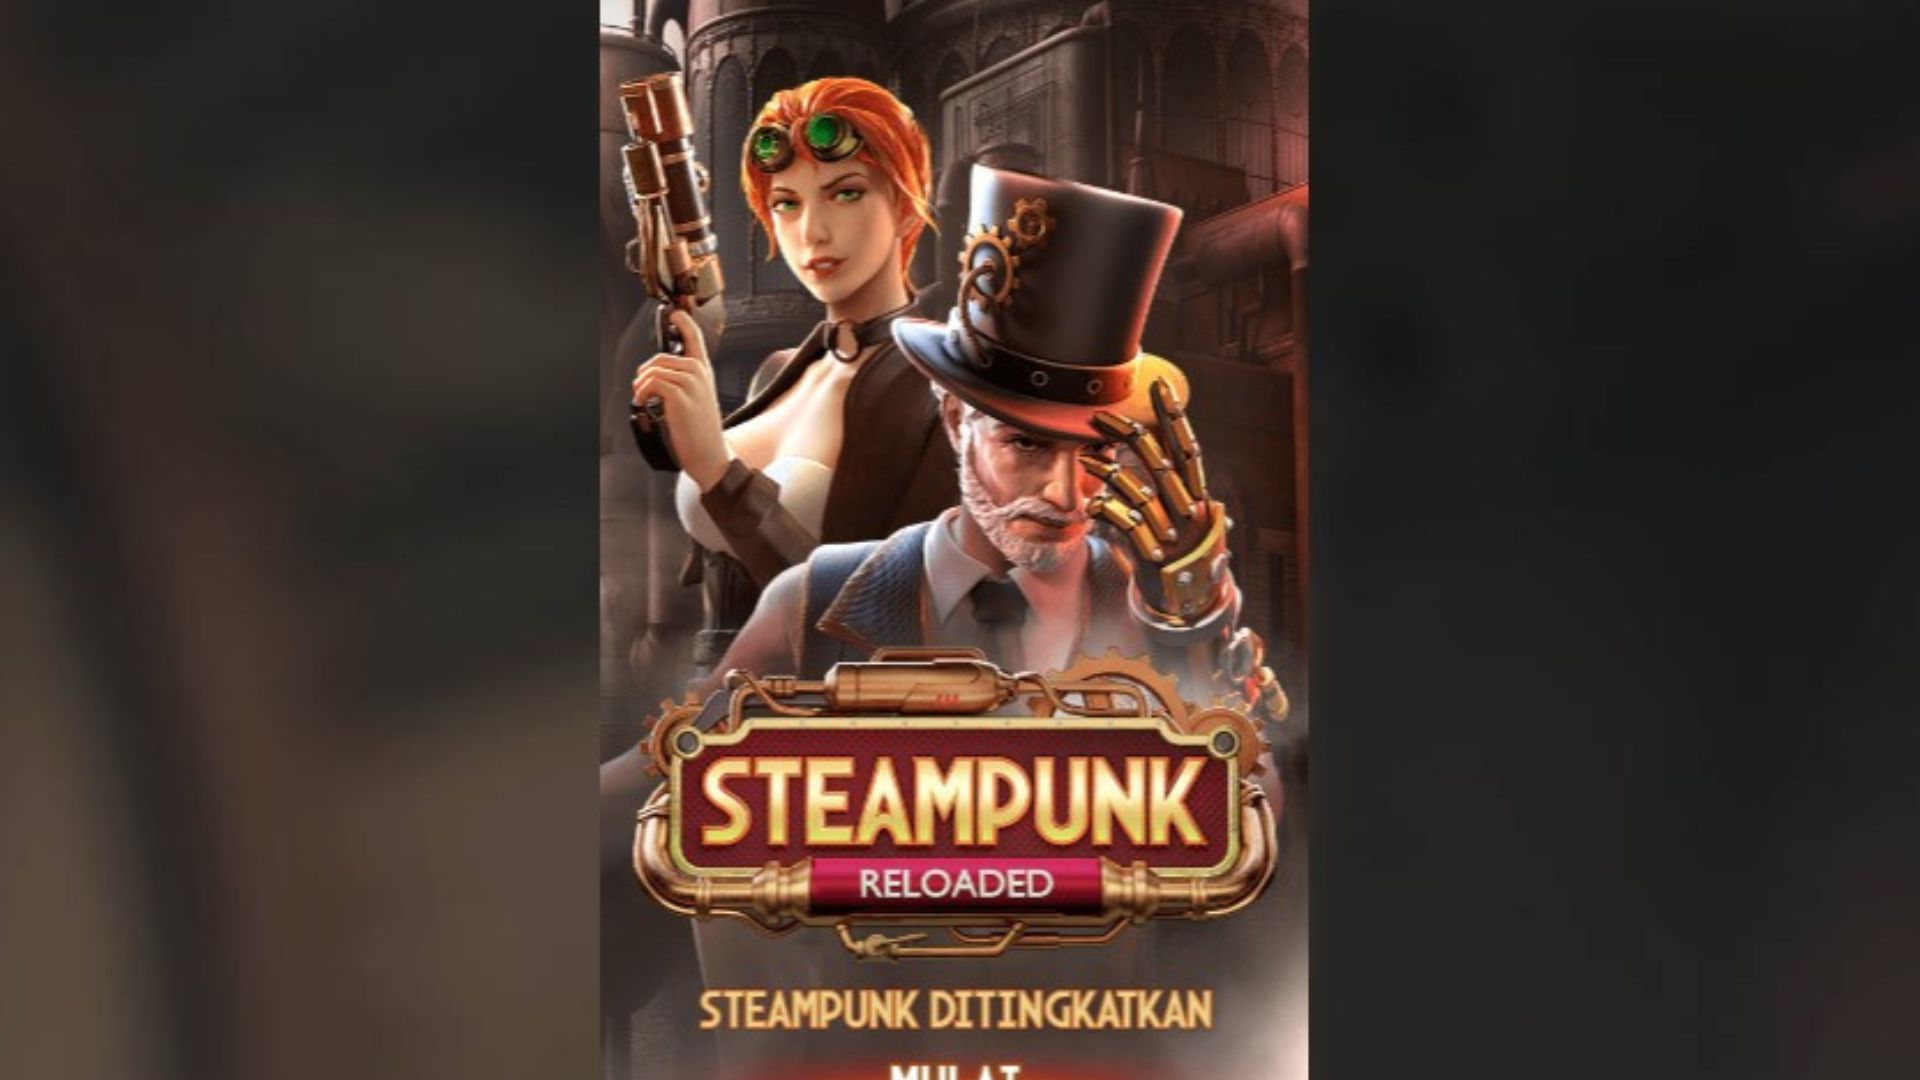 steampunk reloaded gacor